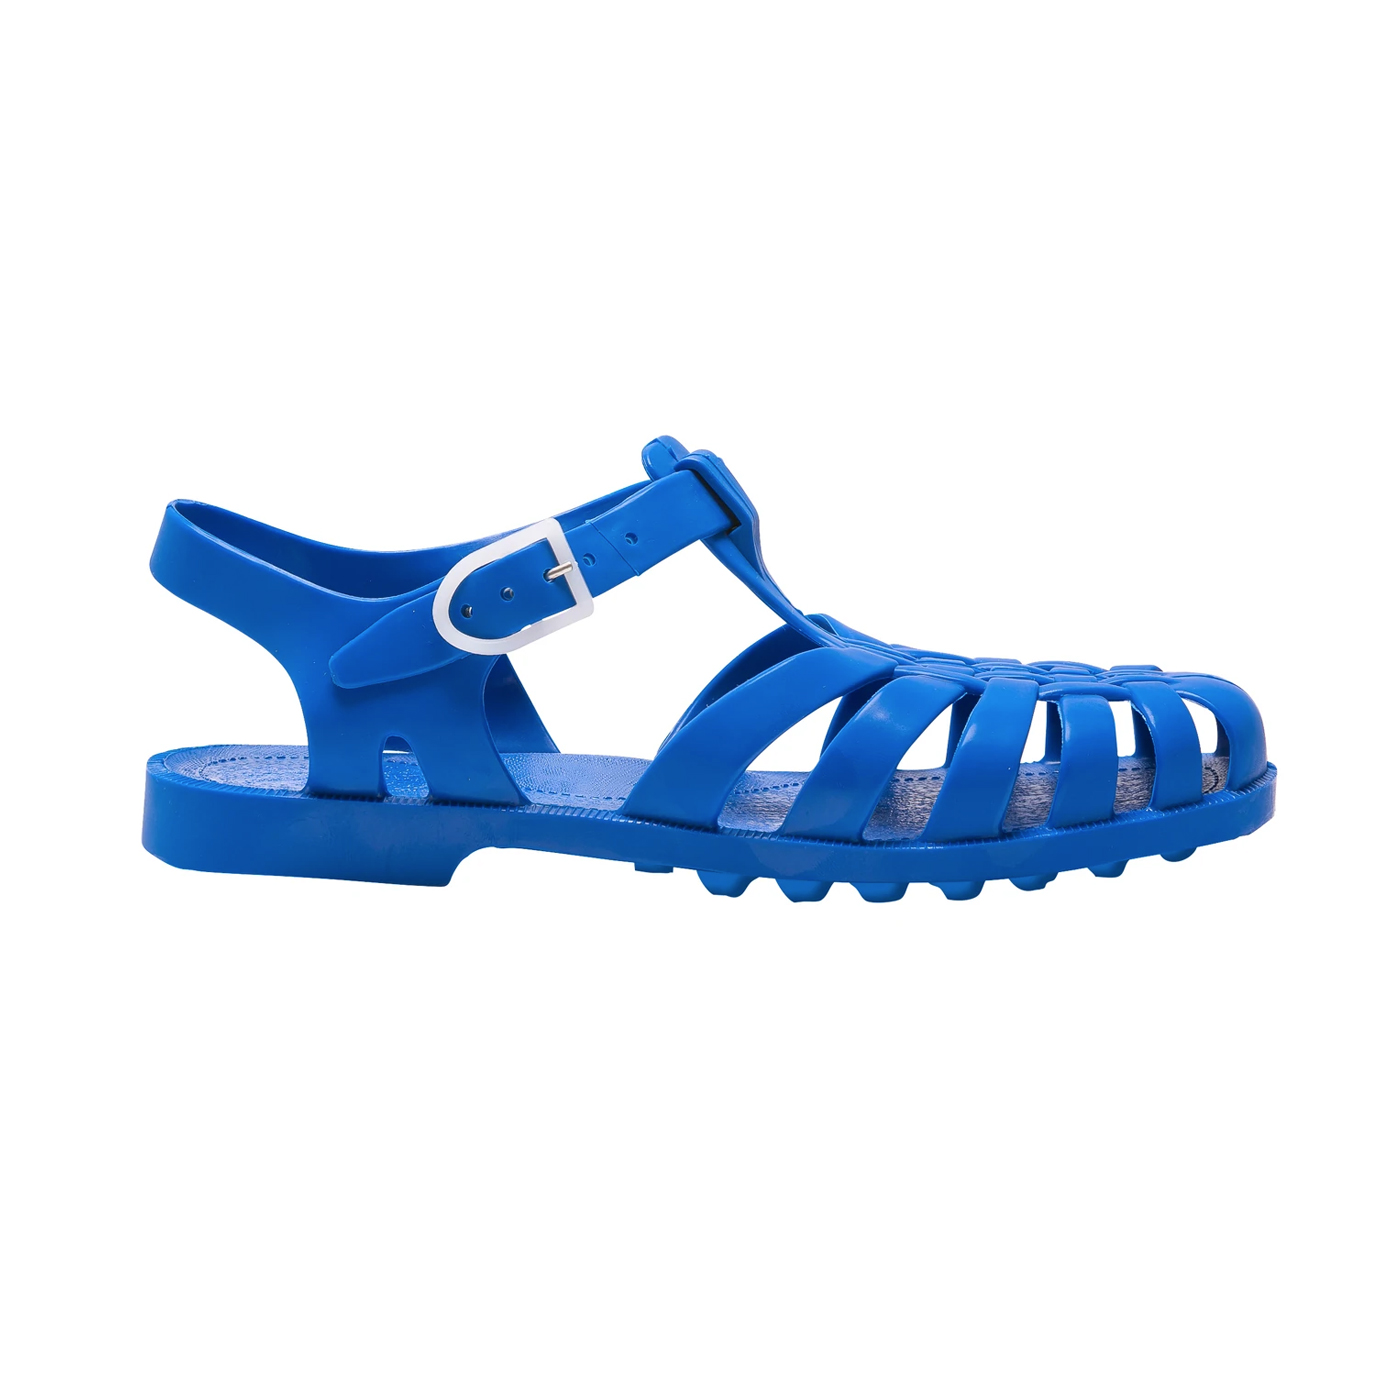  Meduse Sun Blue Roy Sandals - Yetişkin Sandalet  | Blue Roy